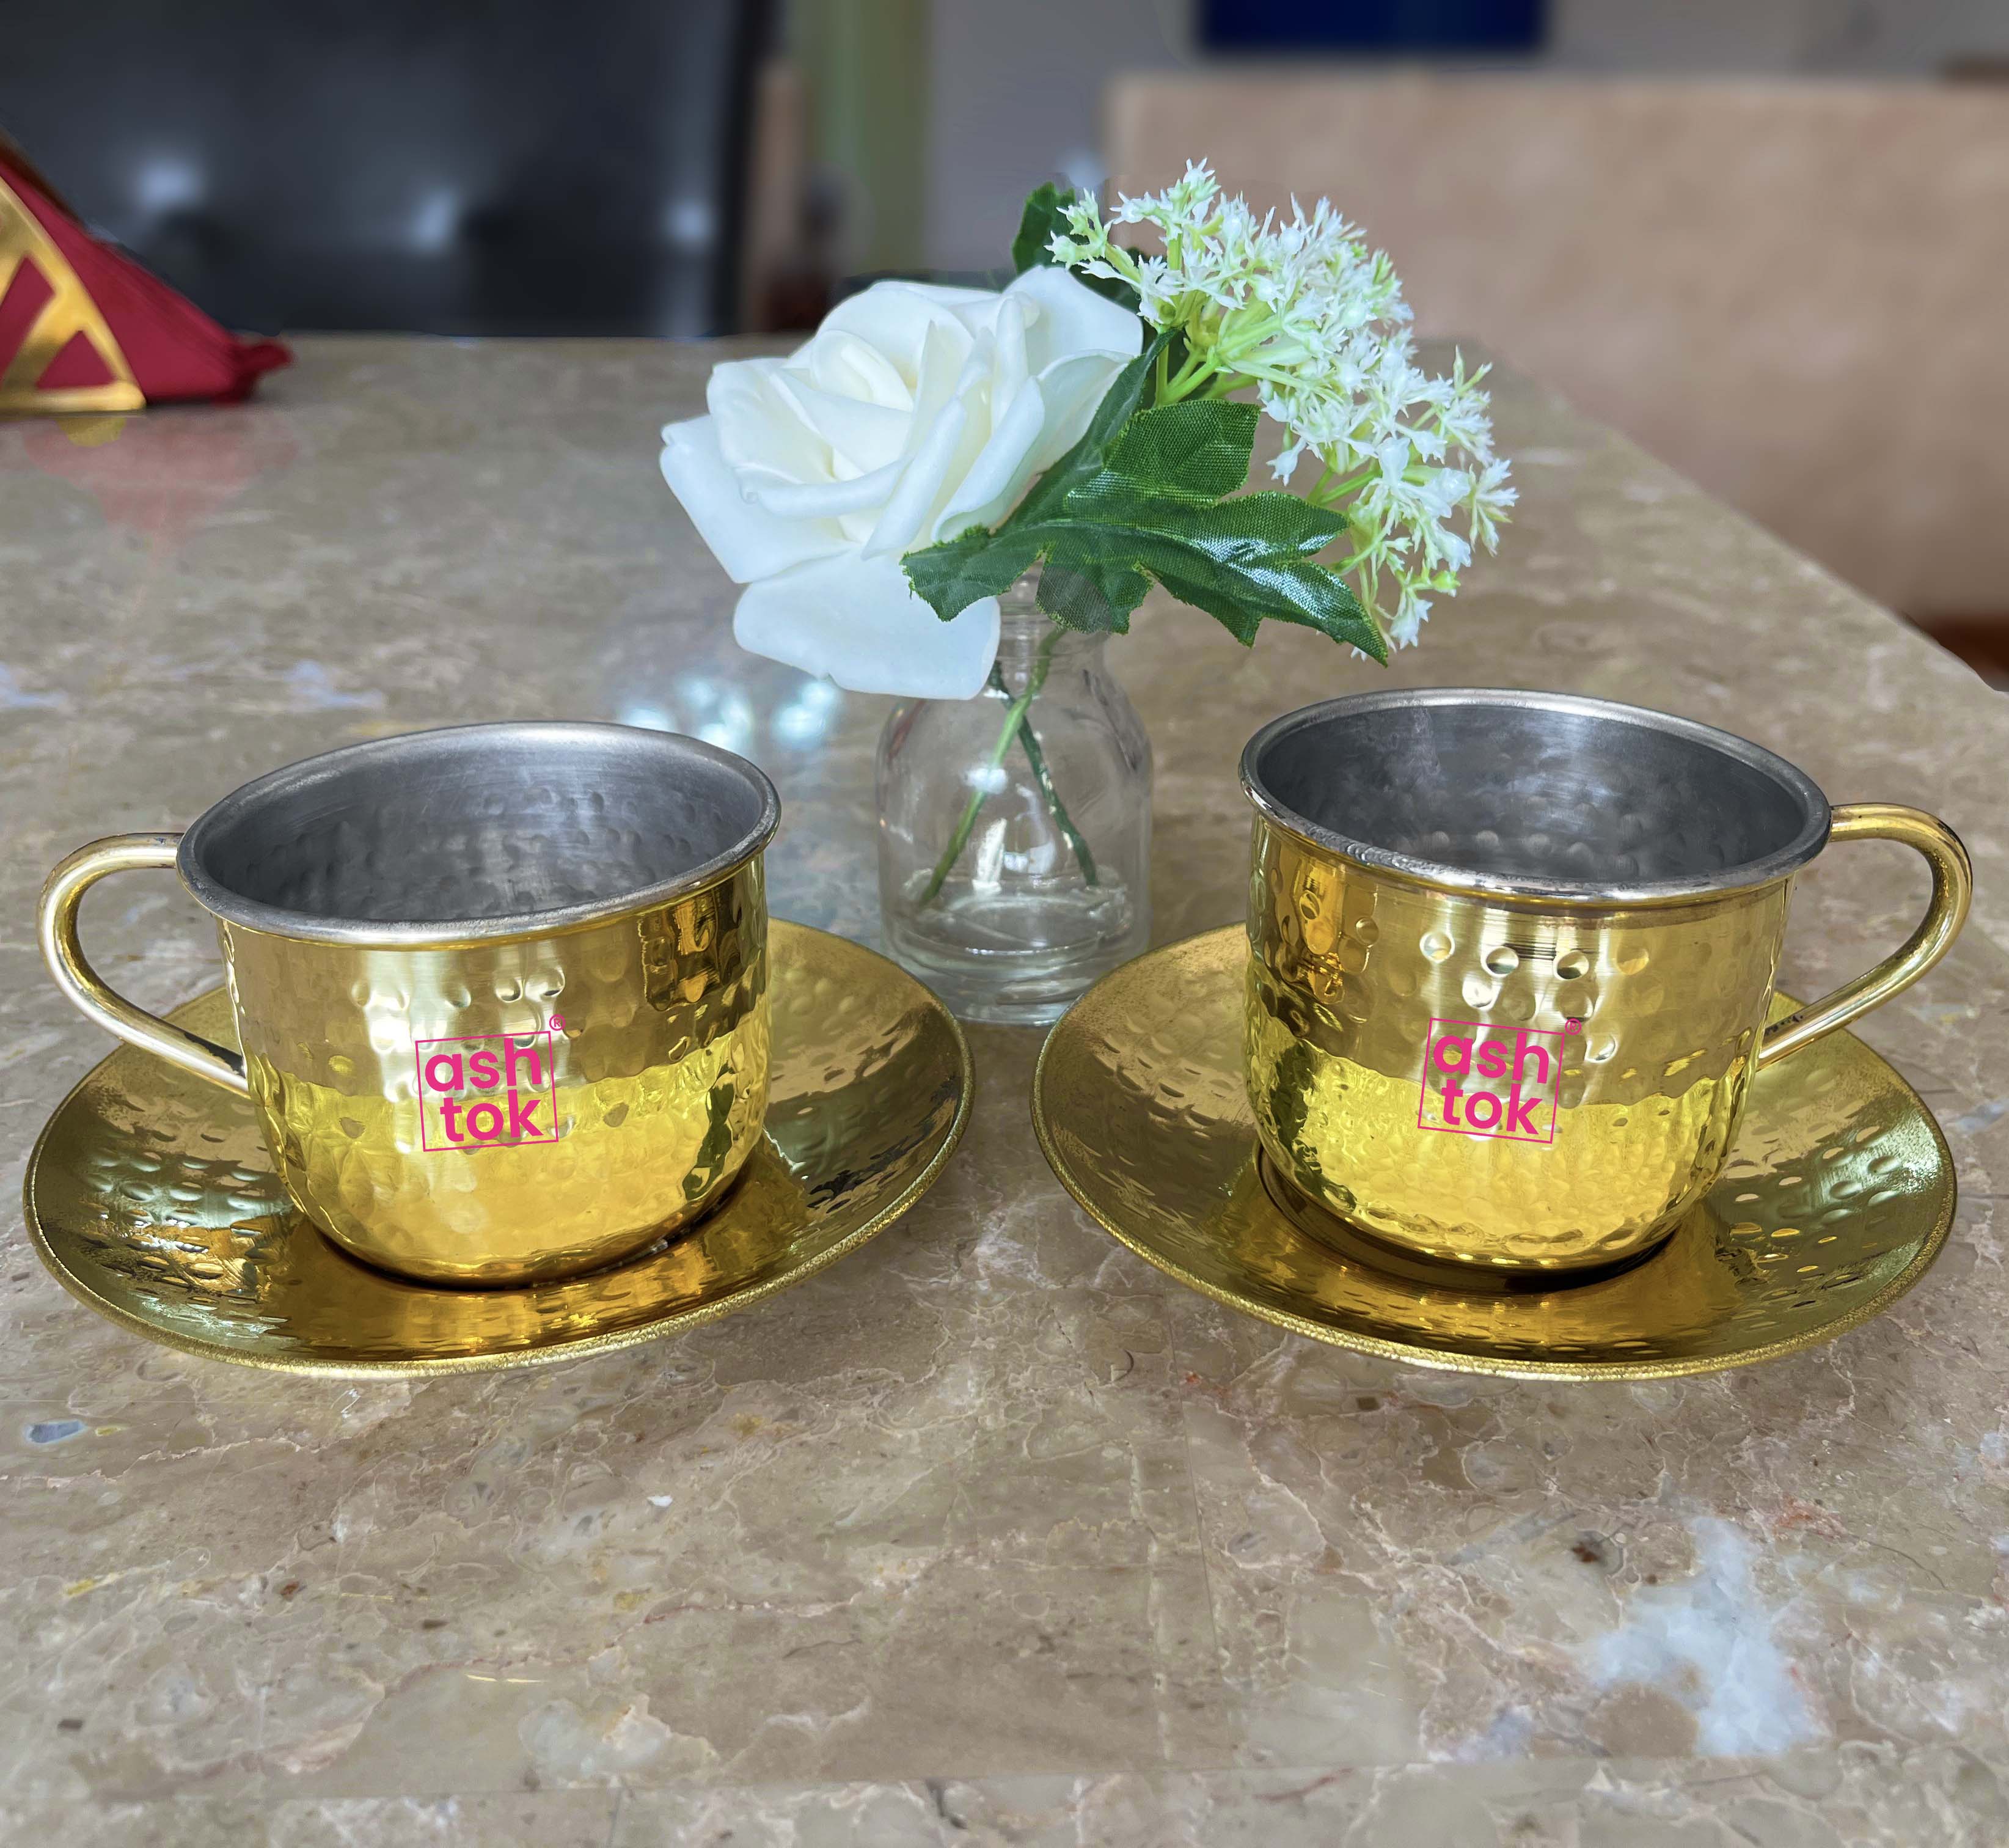 Vintage 5 Piece Brass Coffee and Tea Set, Indian Brass. 